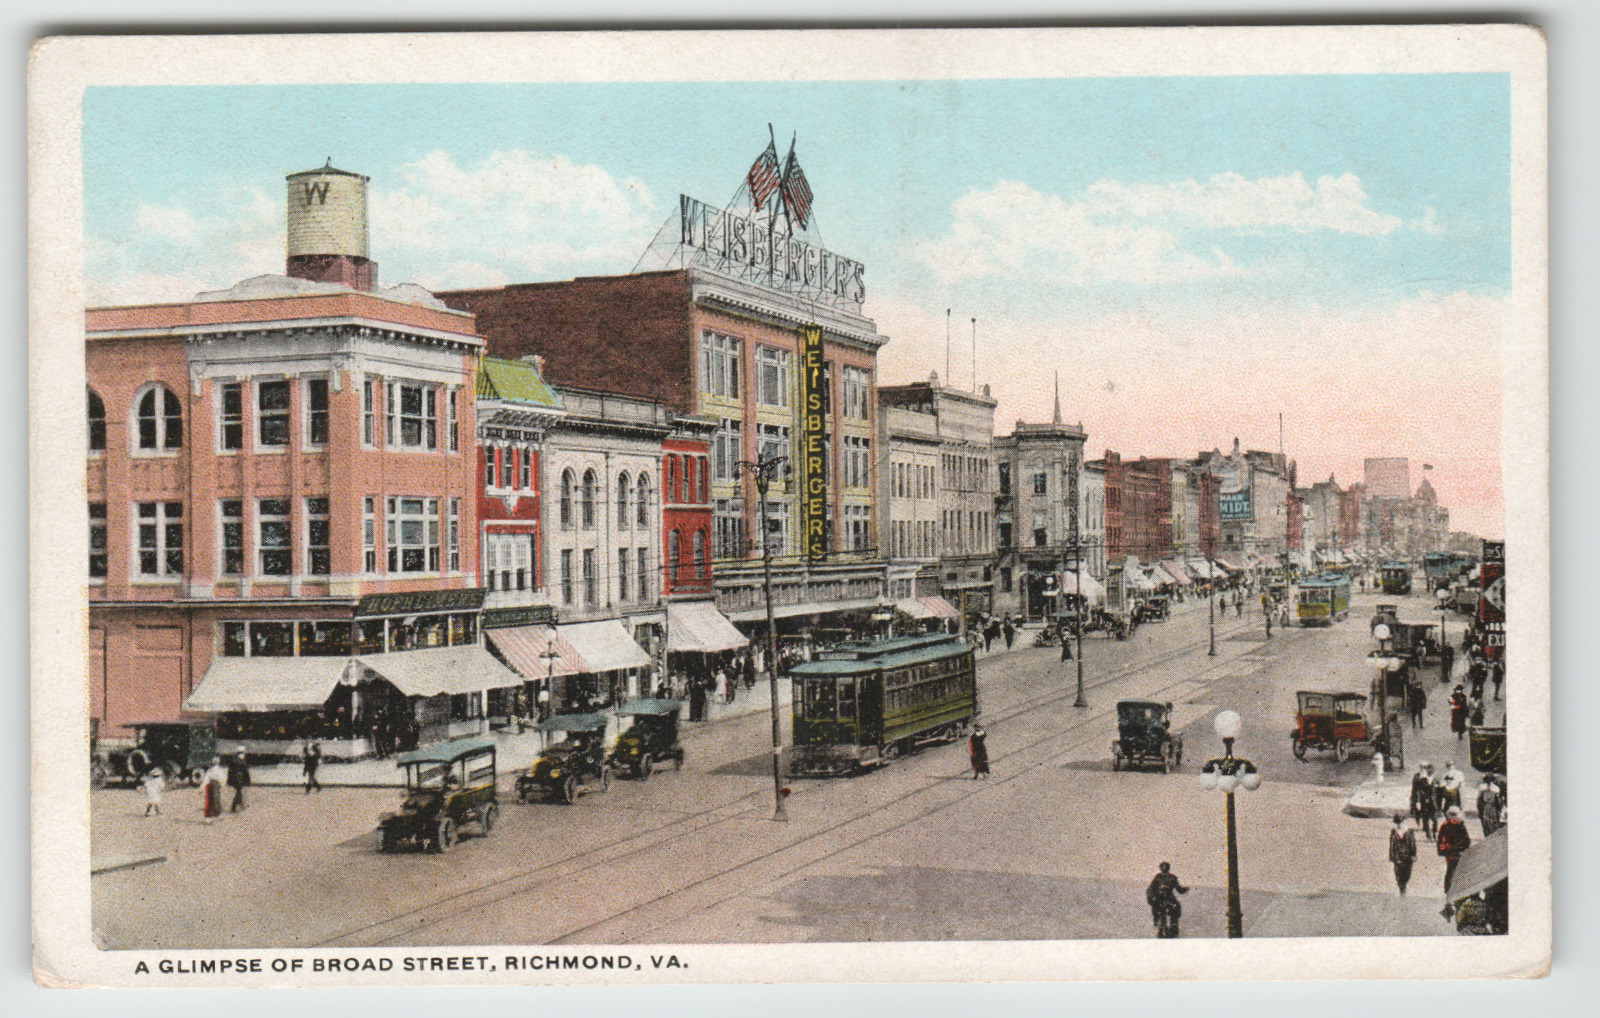 Postcard Vintage Broad Street showing Weisberger's Store in Richmond, VA.